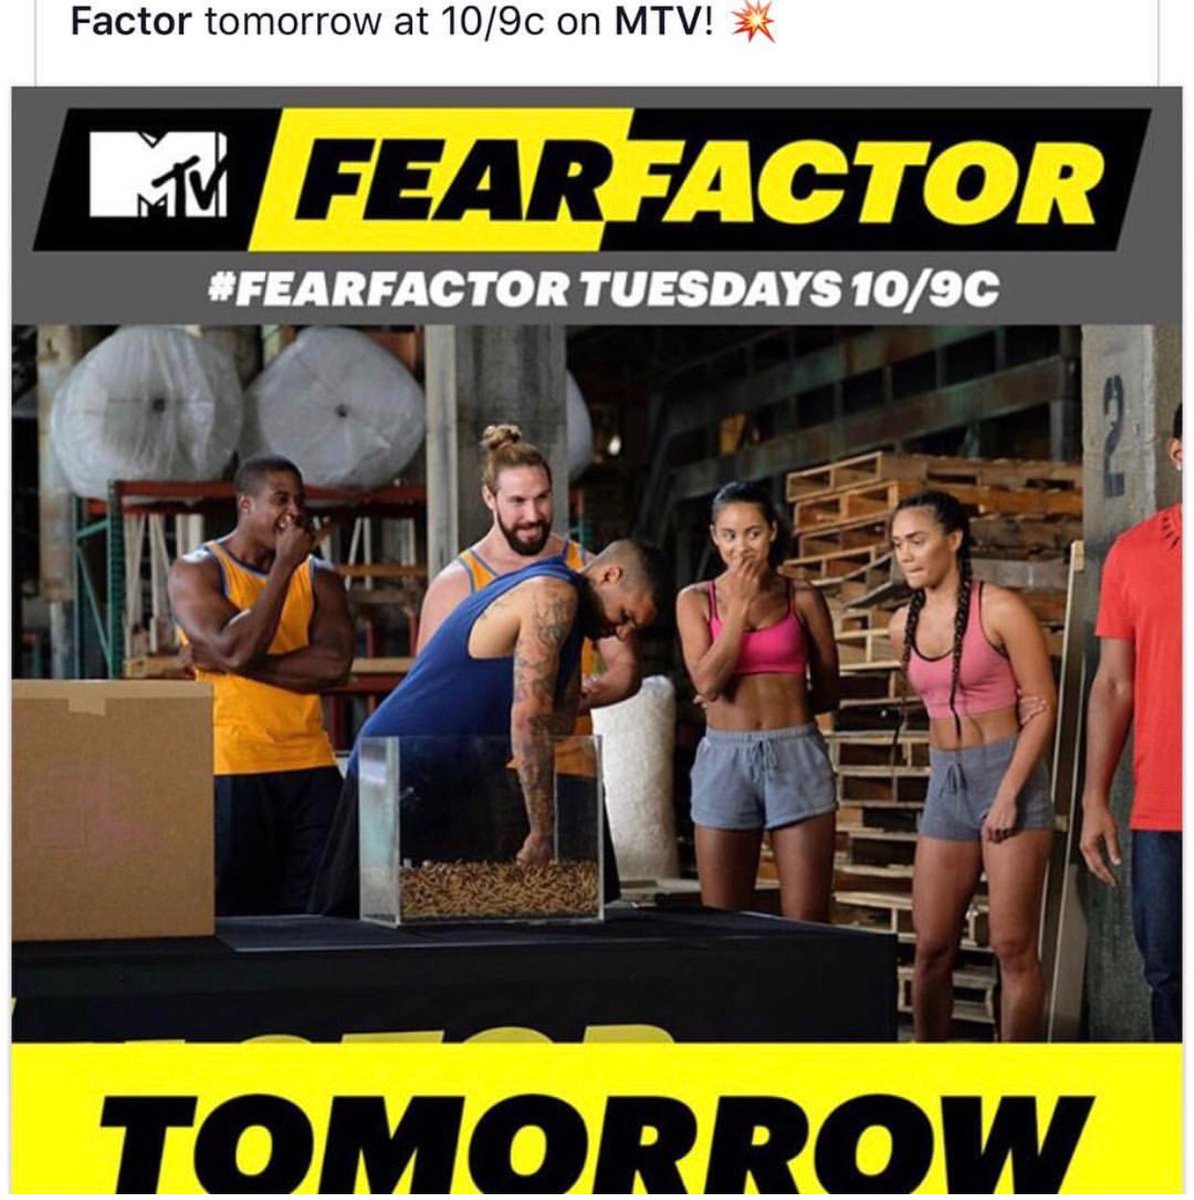 Tmrw I'm taking over @fearfactor twitter! Make sure you tune in to the show tmrw! https://t.co/6QAhuVEmtJ